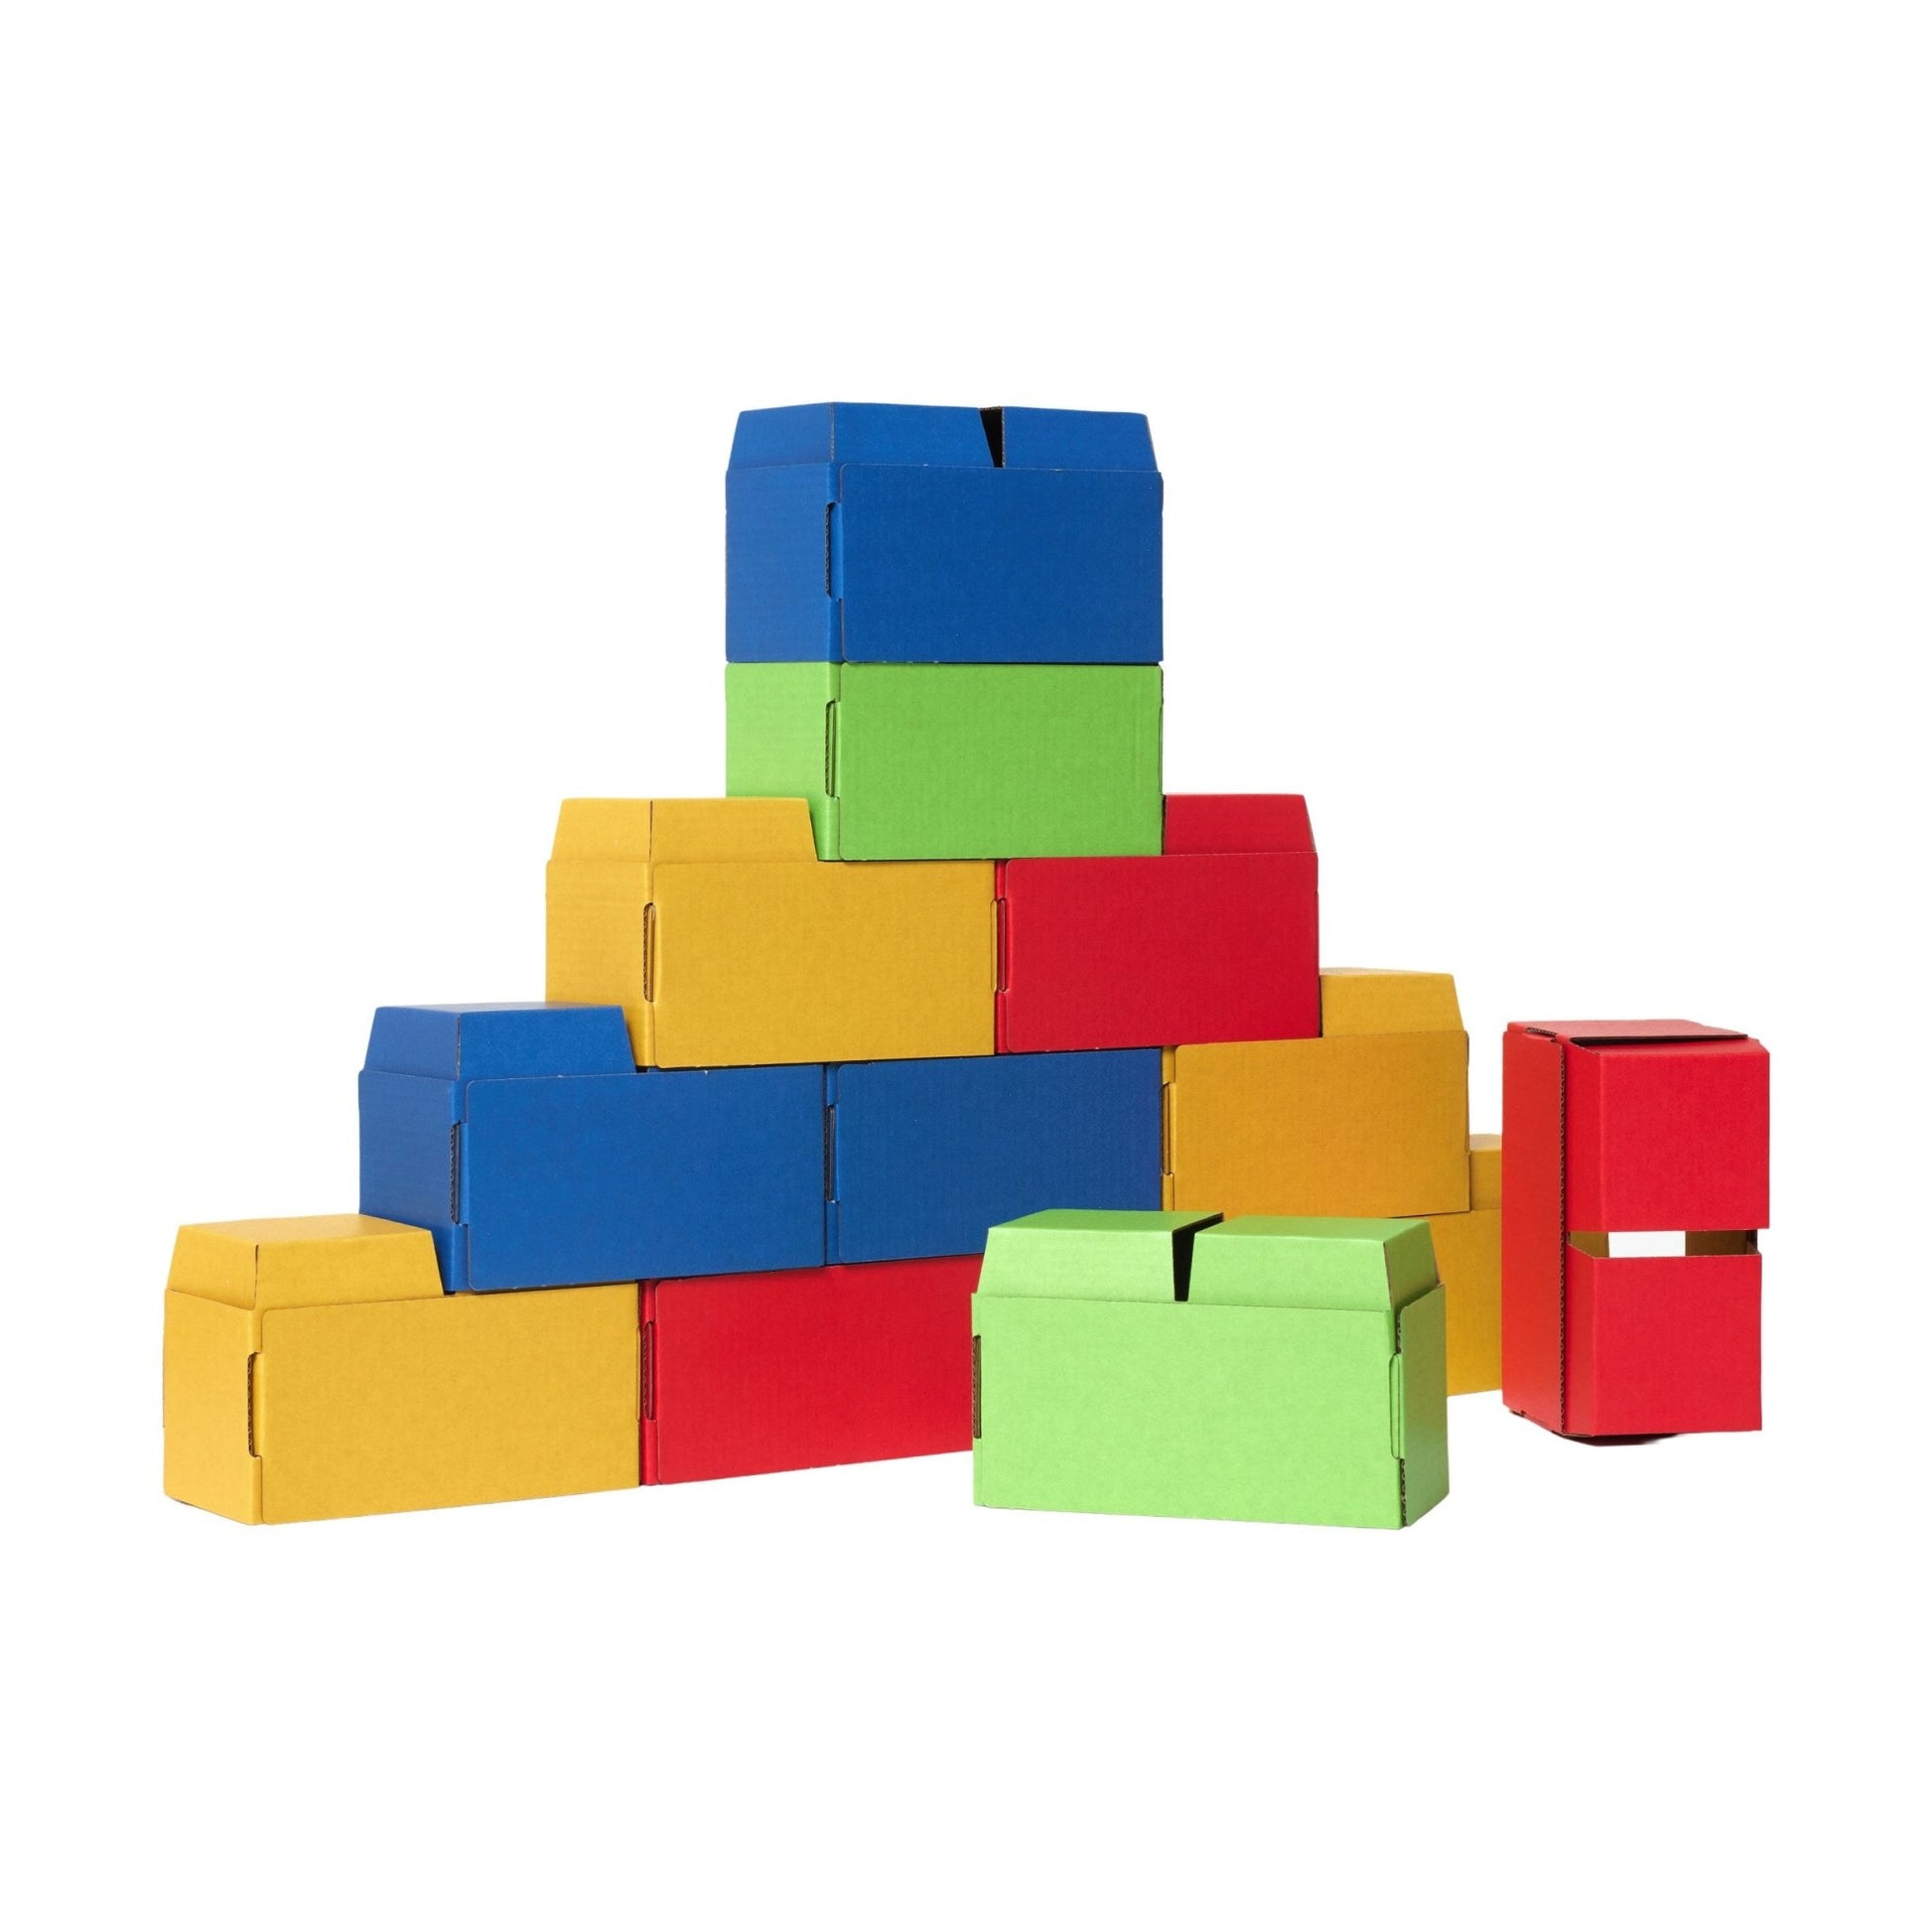 Introducing RIWI Building Blocks! XXL soft foam blocks